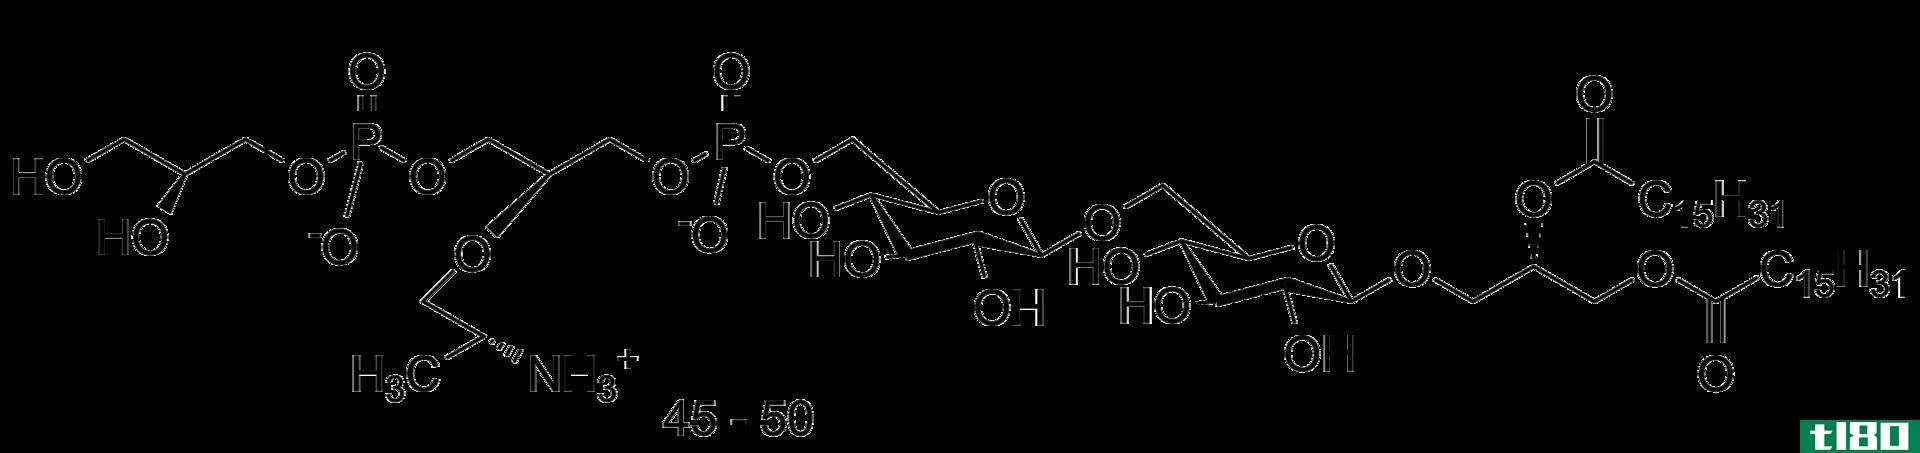 磷壁酸(wall teichoic acid)和脂磷壁酸(lipoteichoic acid)的区别